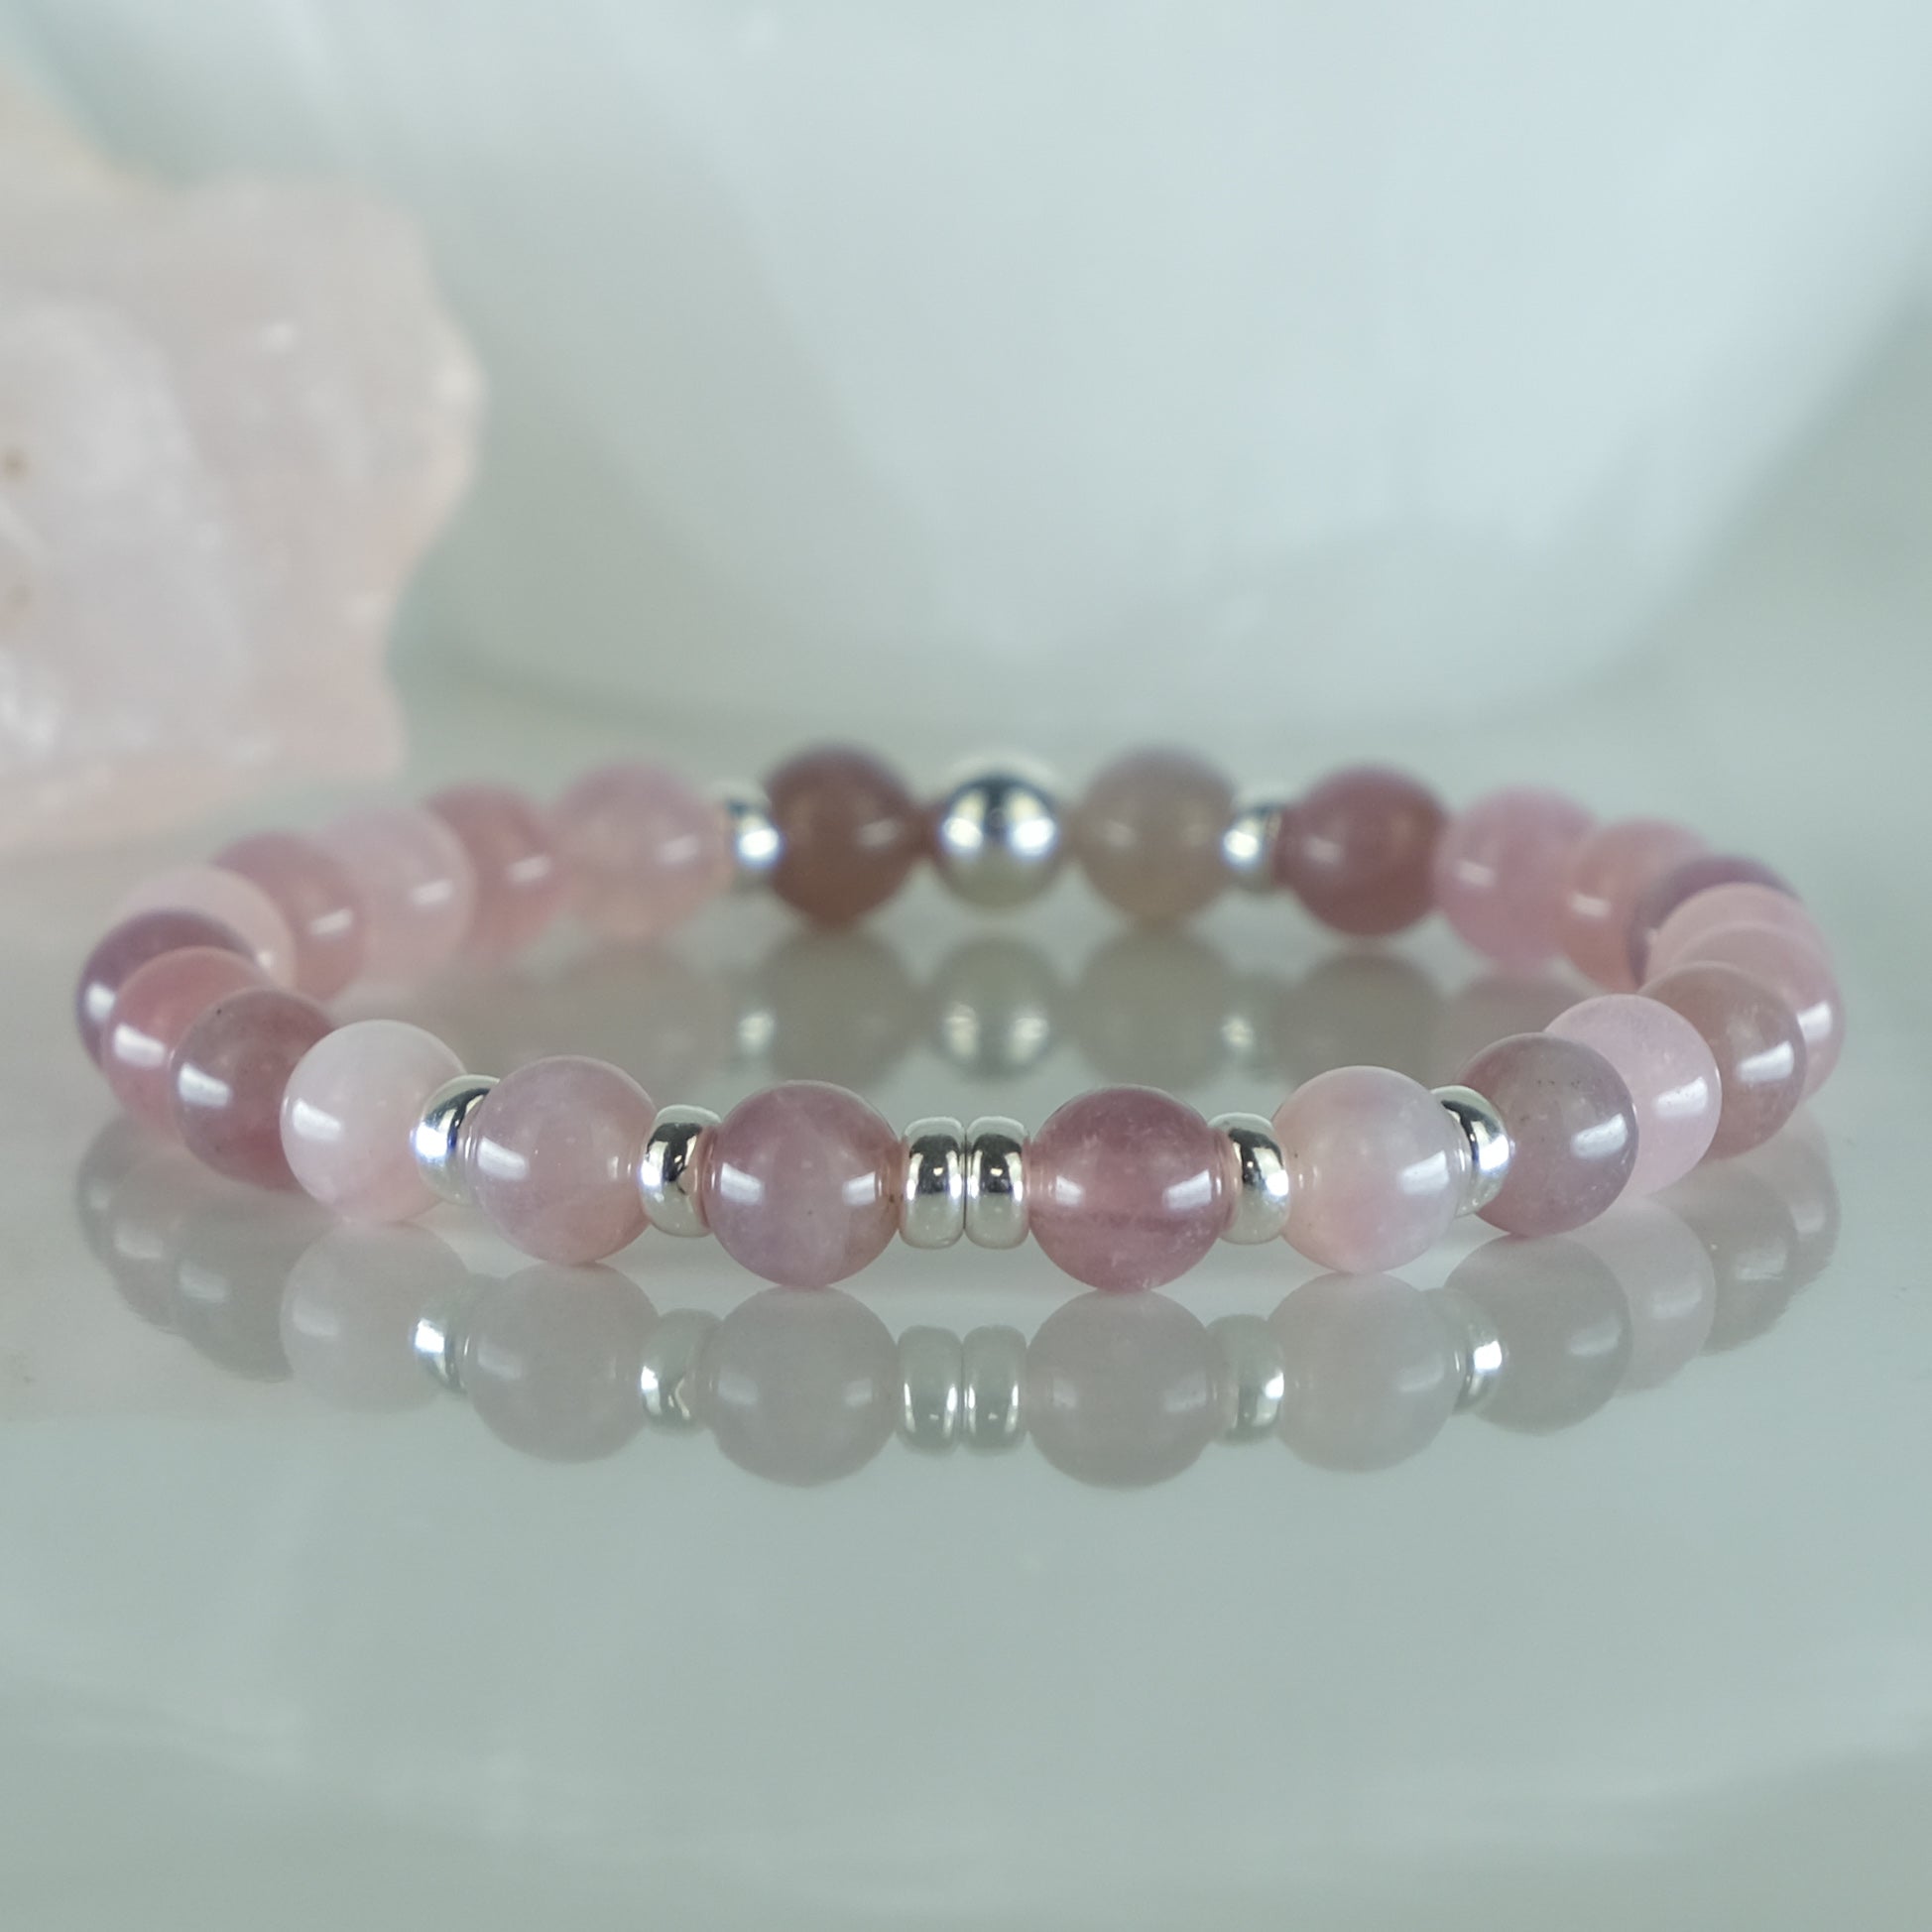 6mm lavender rose quartz gemstone bracelet with silver accents